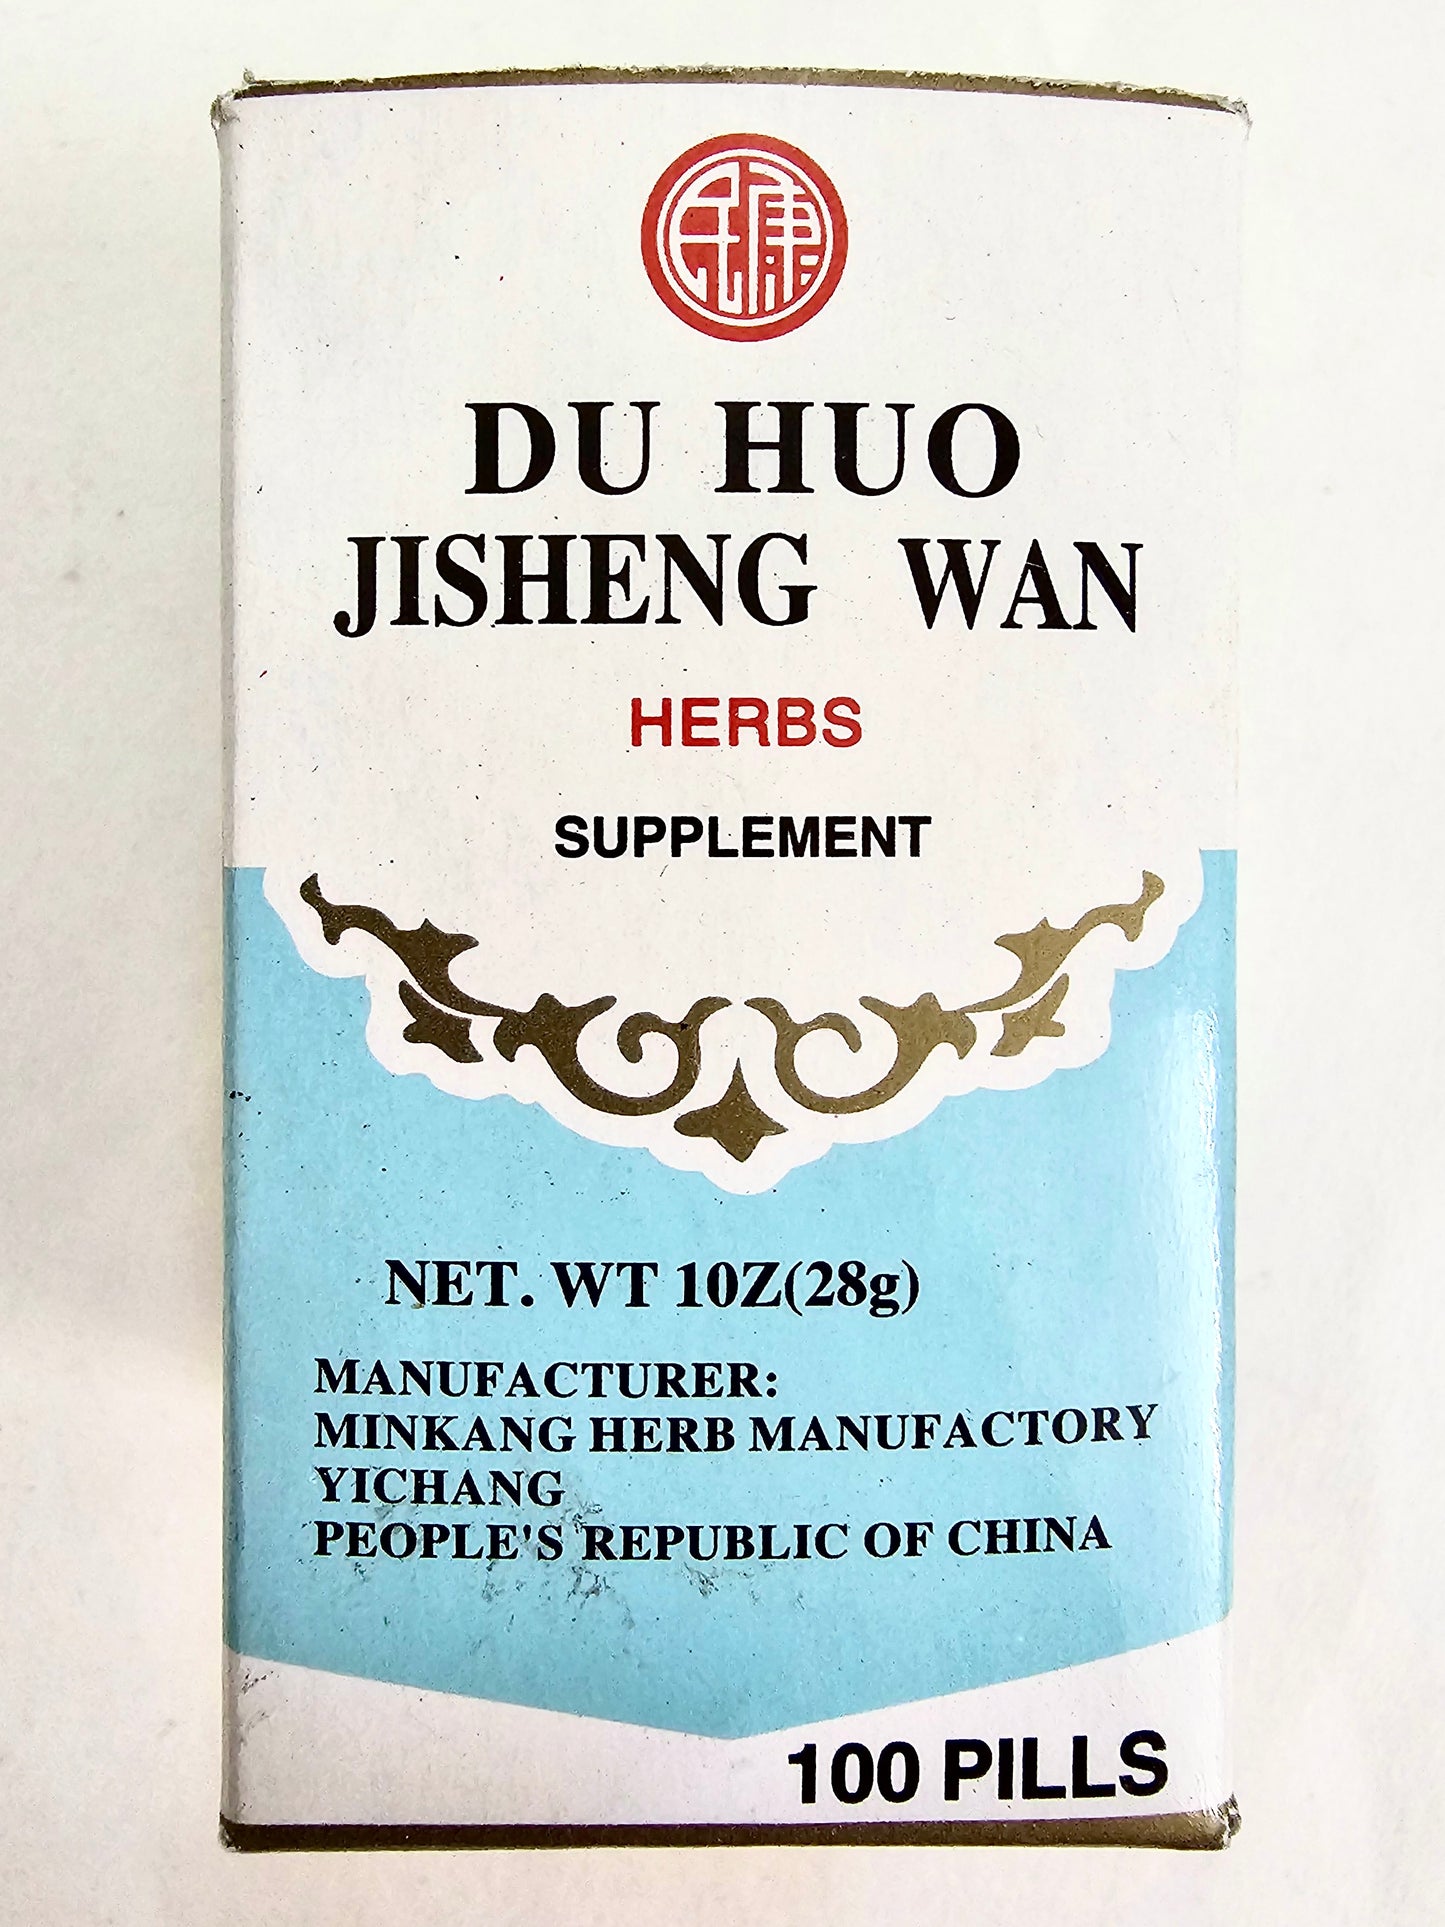 Du Huo Jisheng - Angelica Combination Tea Extract